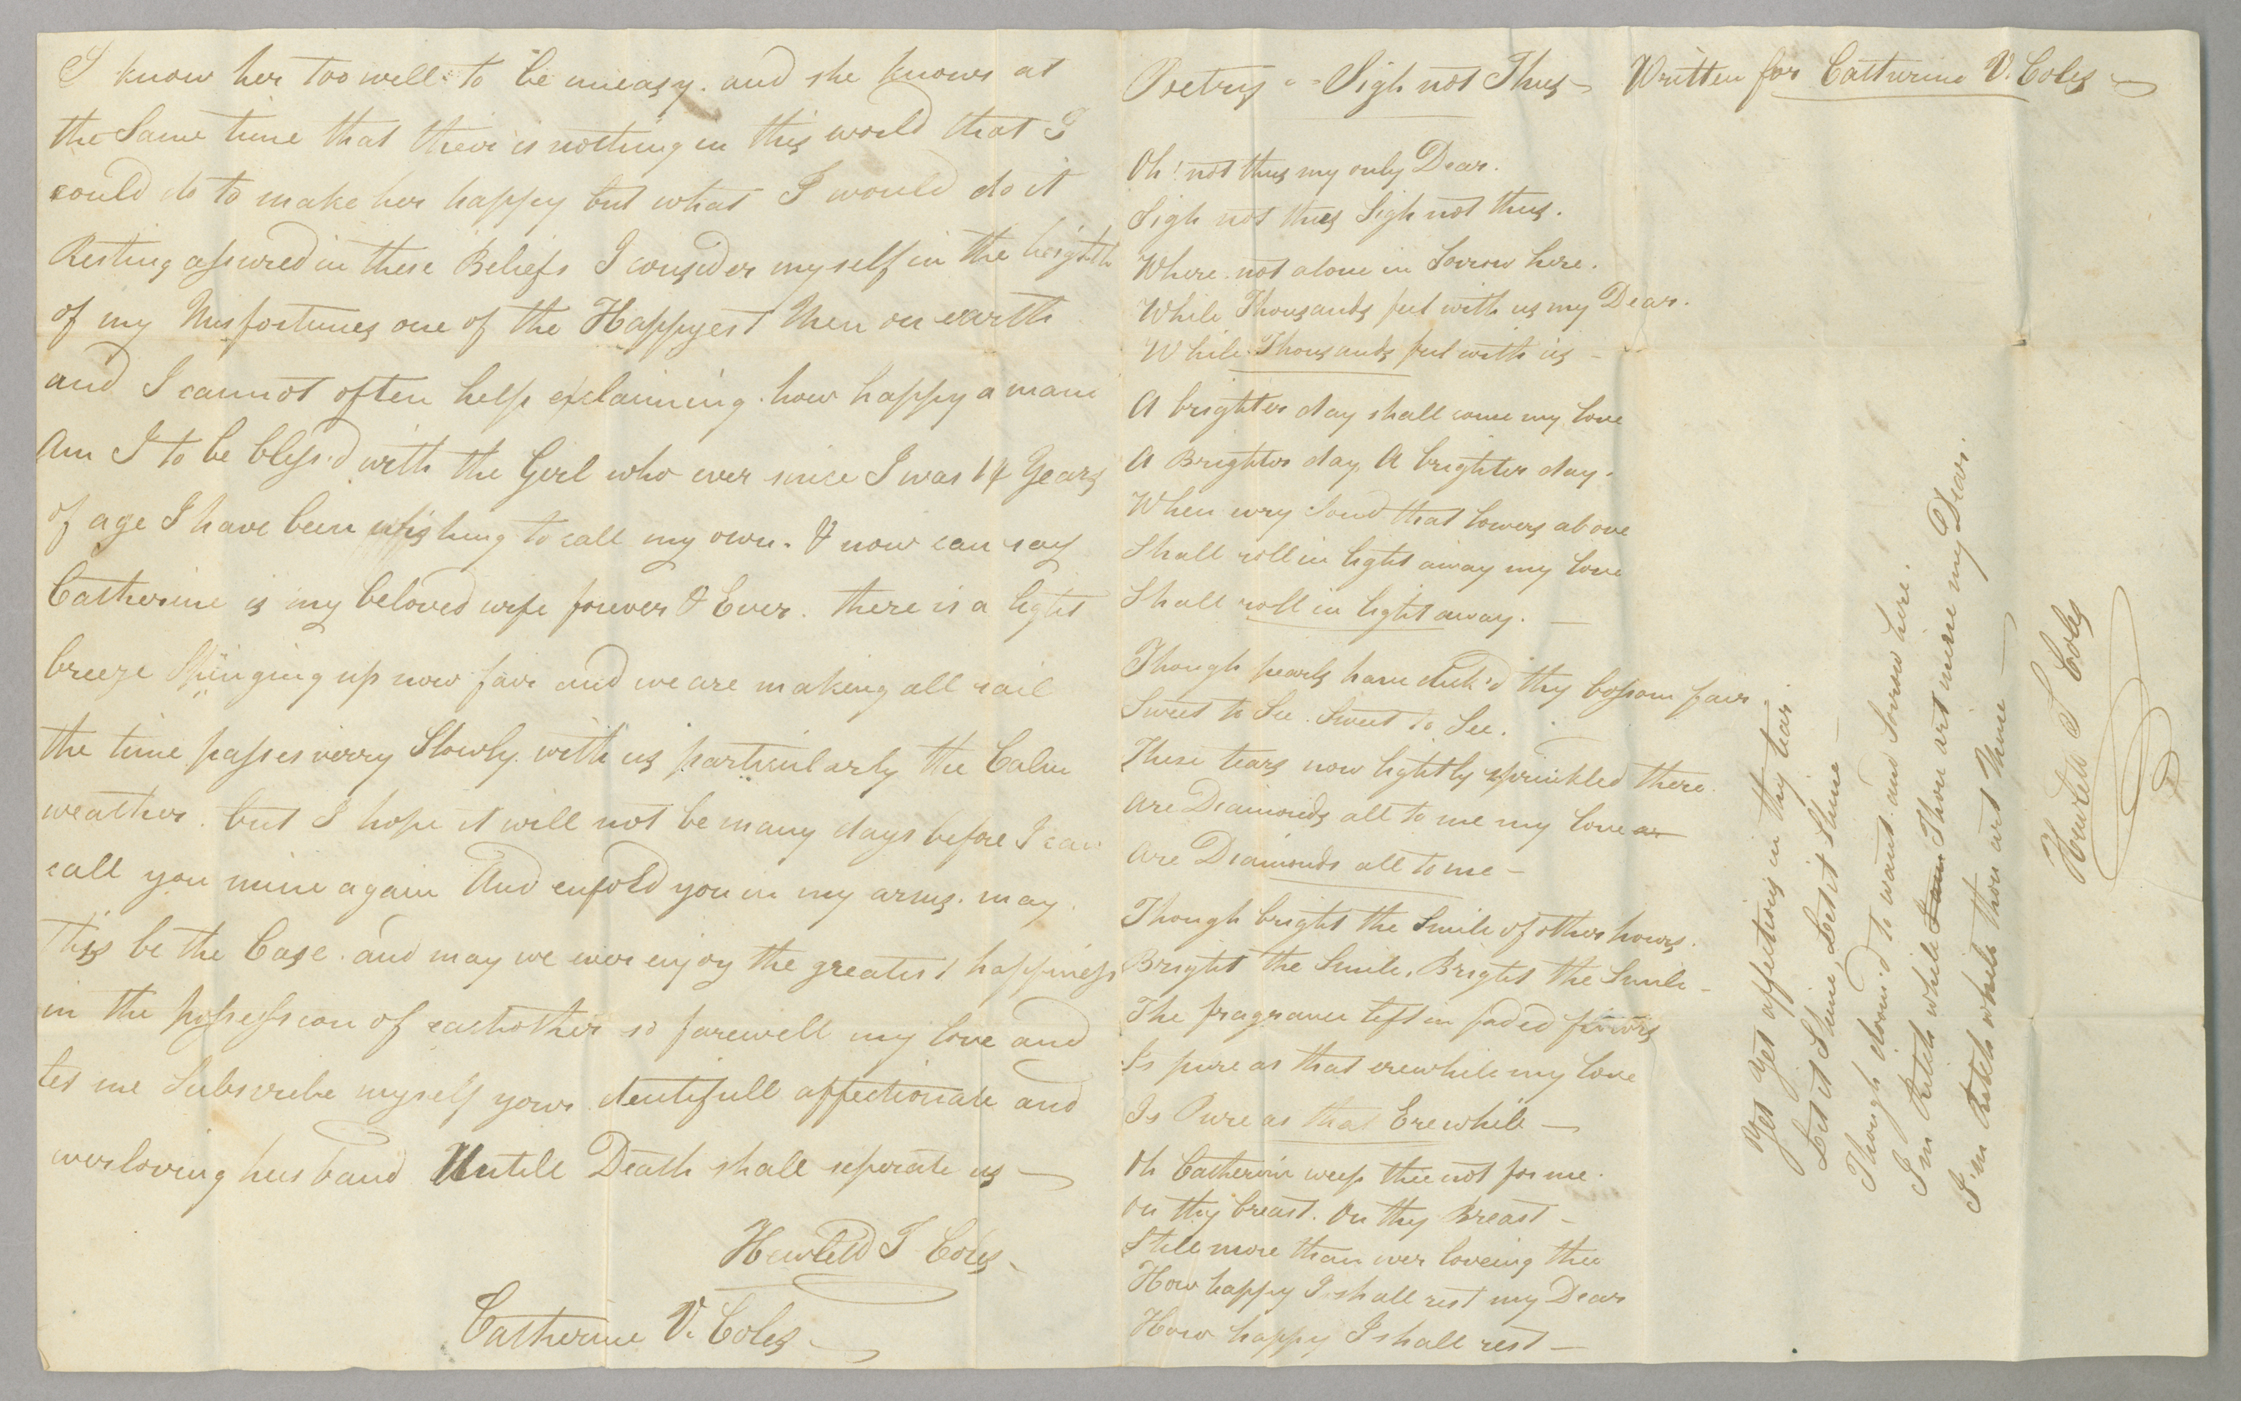 Letter, Hewlett T[ownsend] Coles, n.p., to "My Beloved Catherine," [Catherine Van Suydam Coles], n.p., Pages 2-3